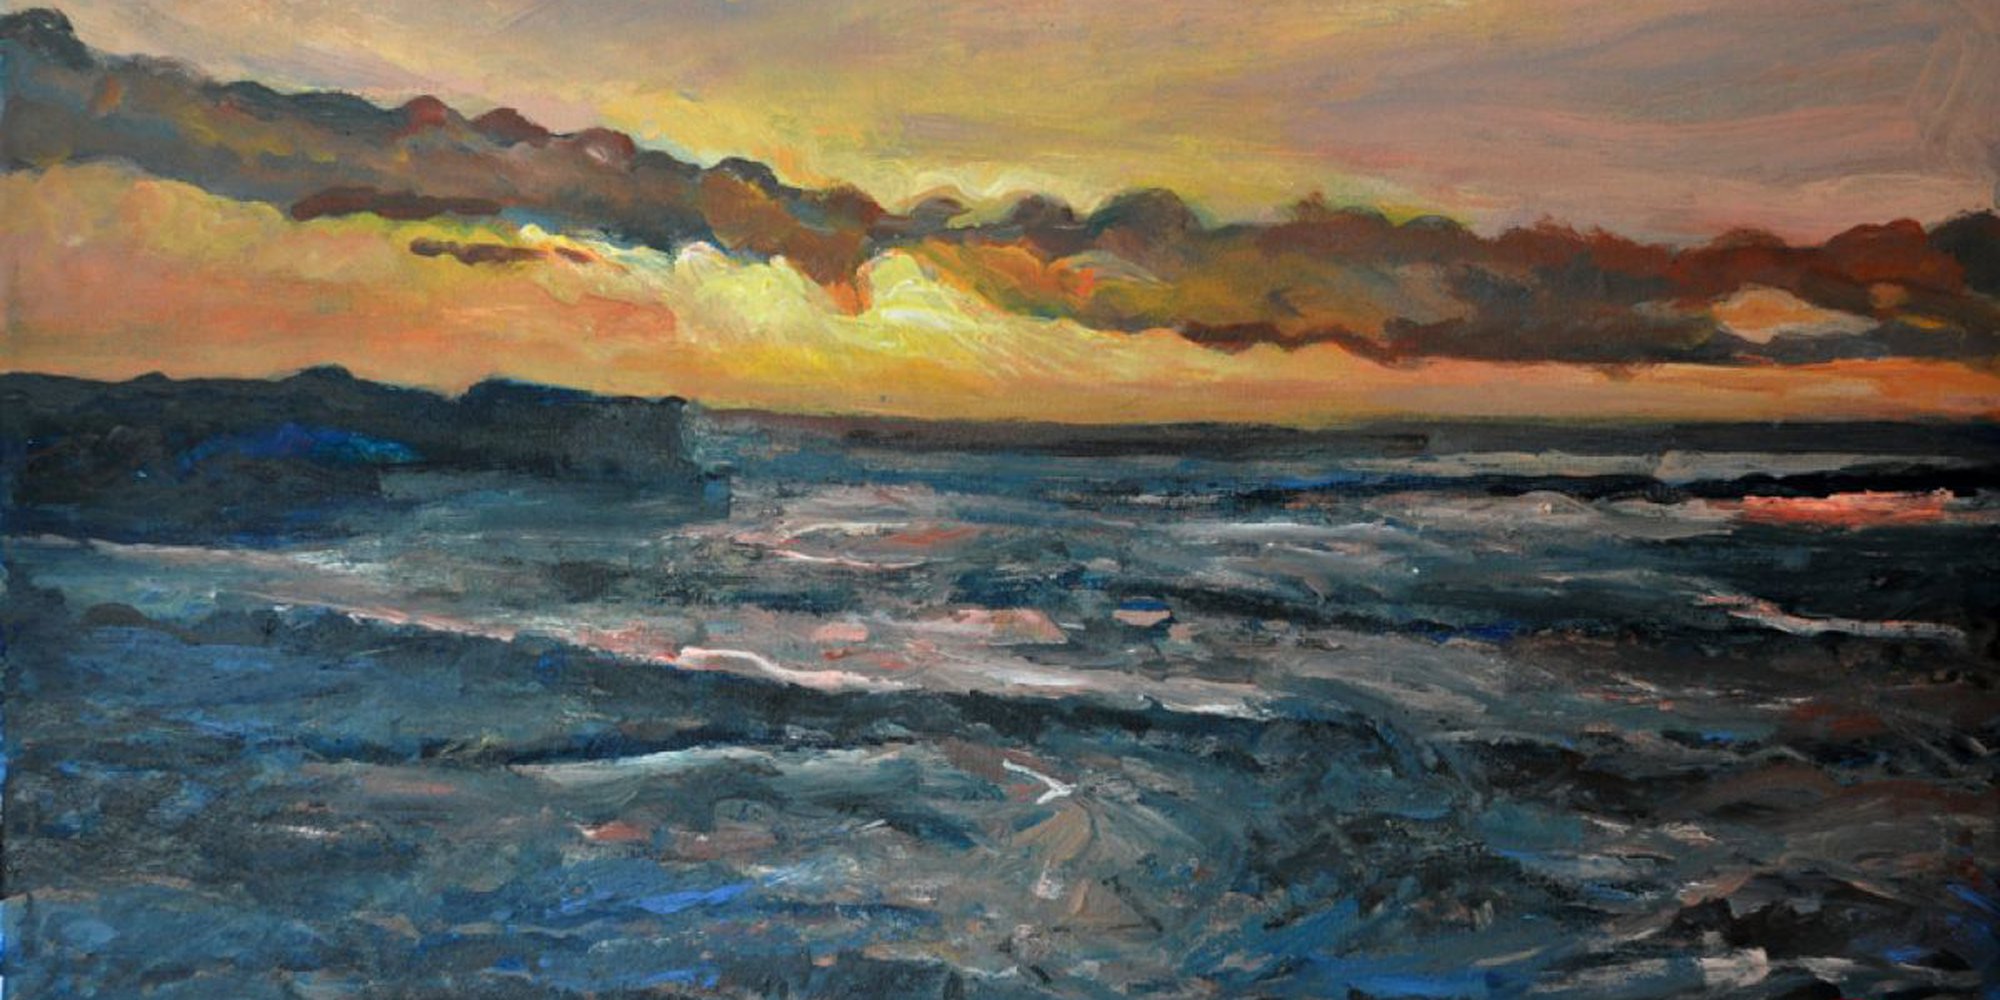 Art of the Day: "Alex Solodov, Sunset on Atlantic Ocean, 2013" by Alex Solodov